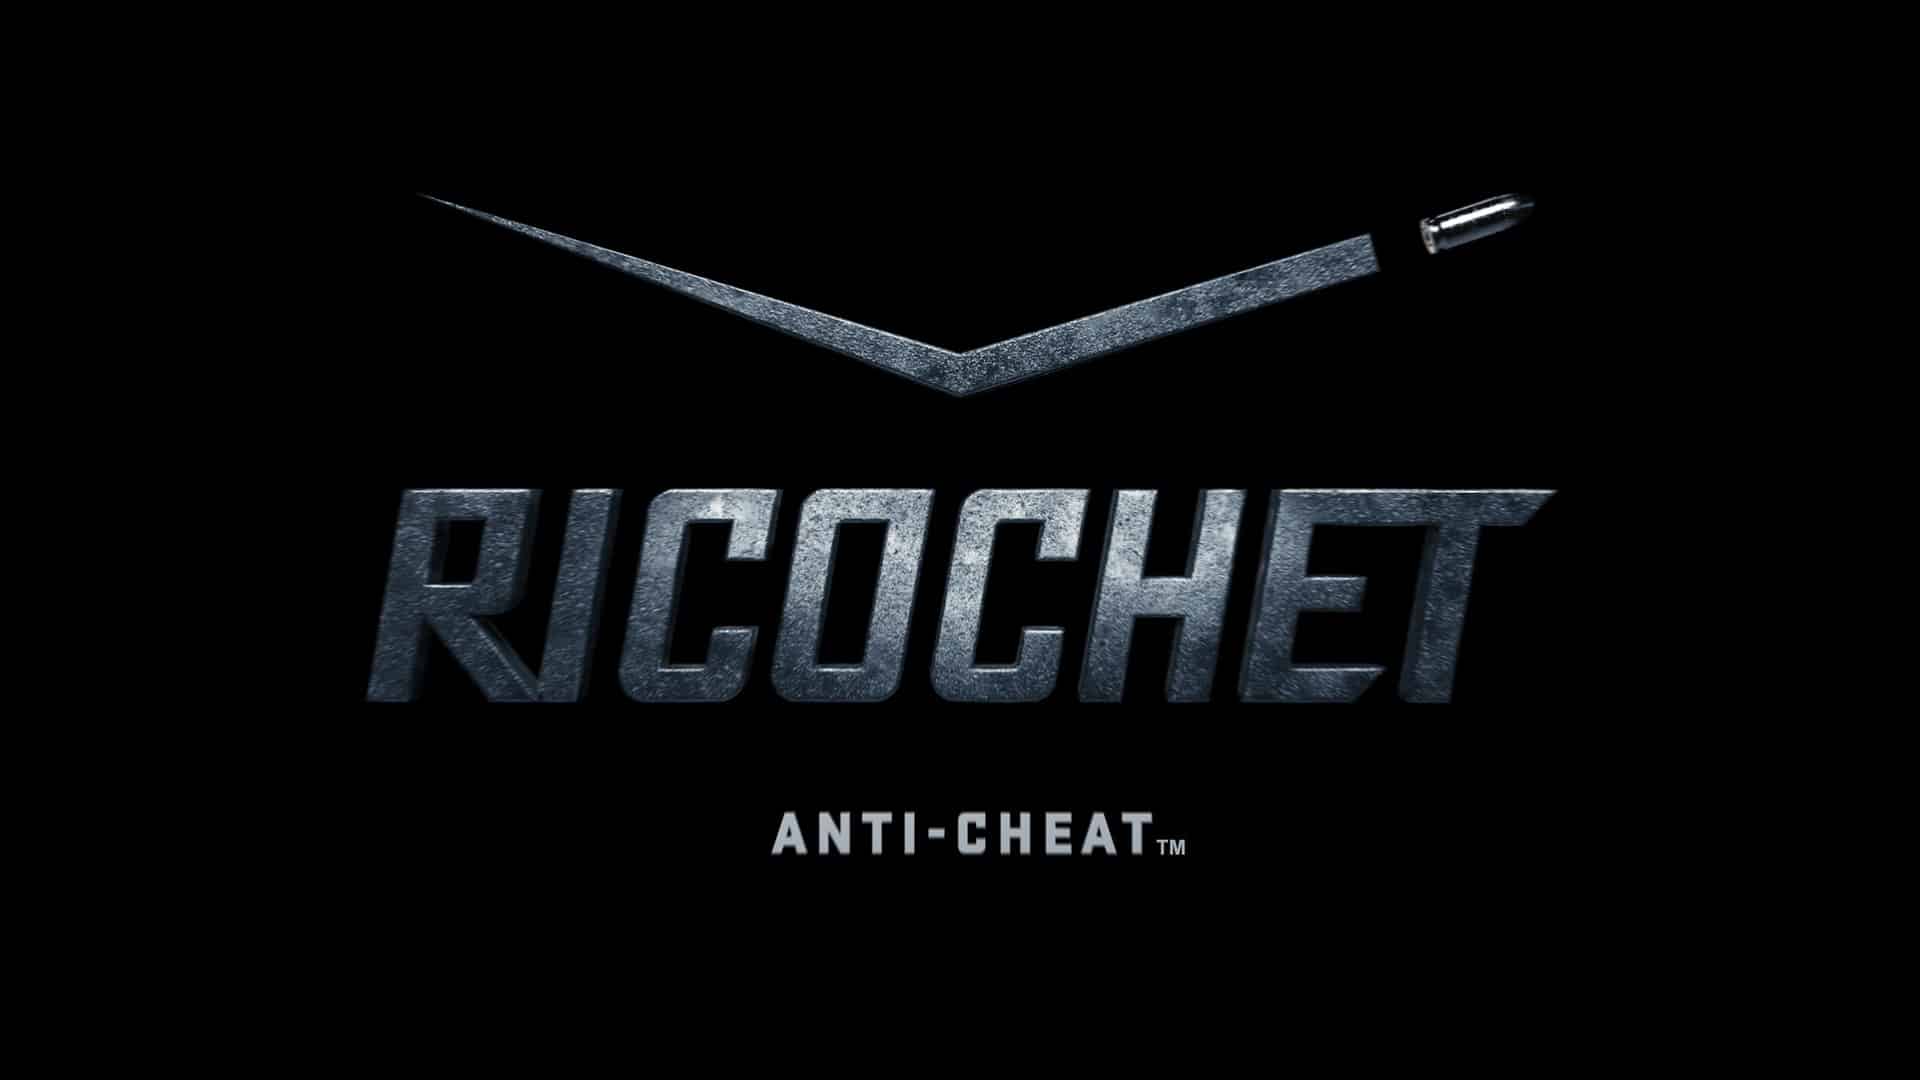 Ricochet anti-cheat call of duty